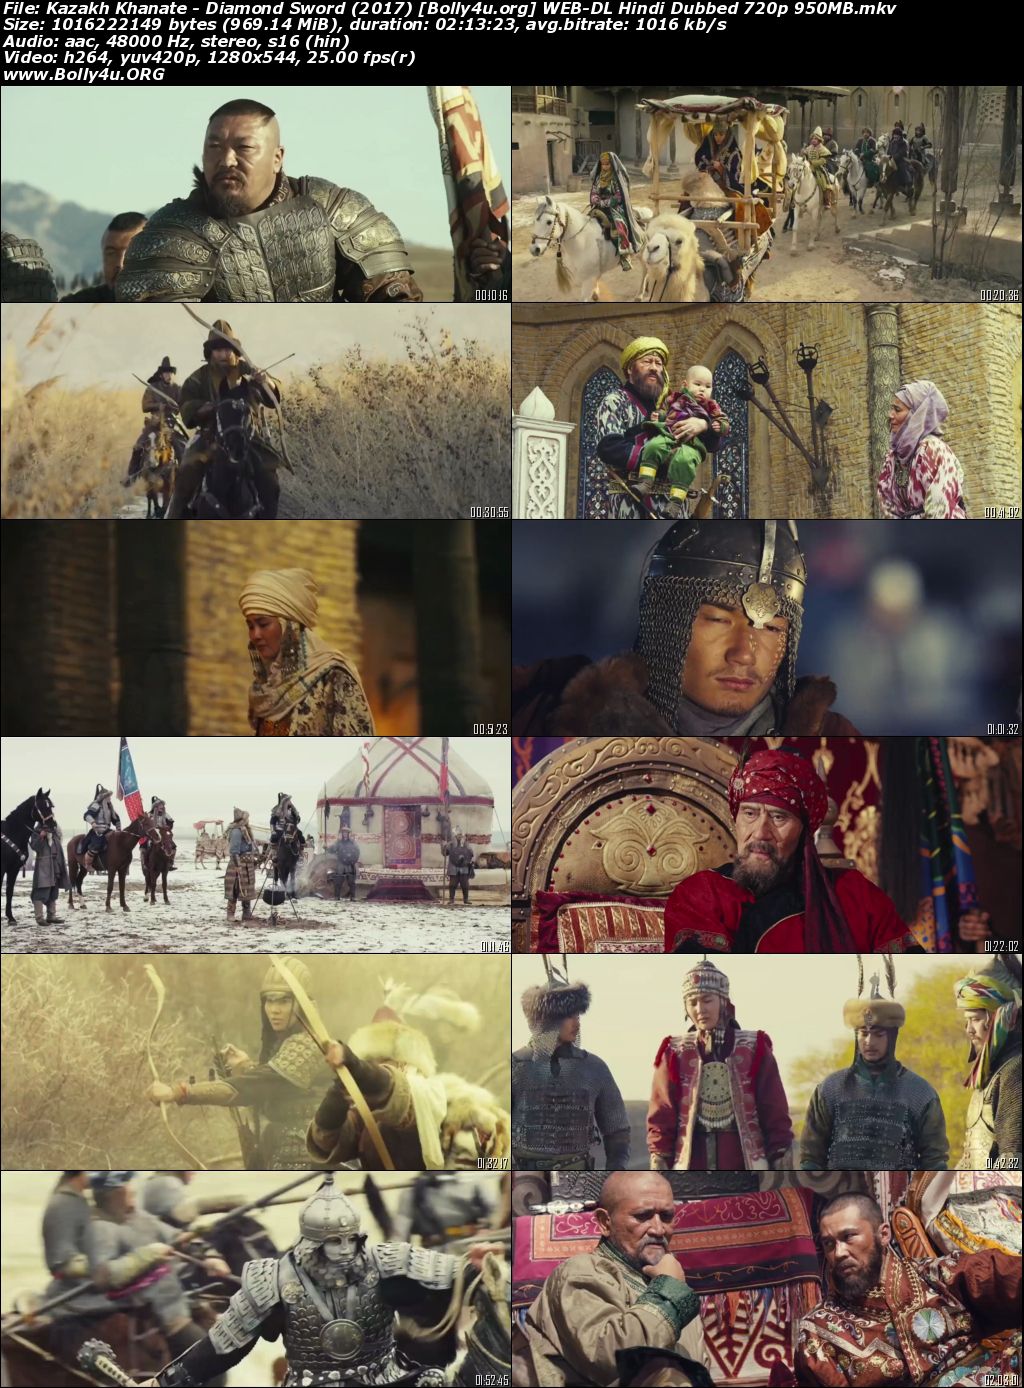 Kazakh Khanate Diamond Sword 2017 WEB-DL Hindi Dubbed Full Movie Download 720p 480p